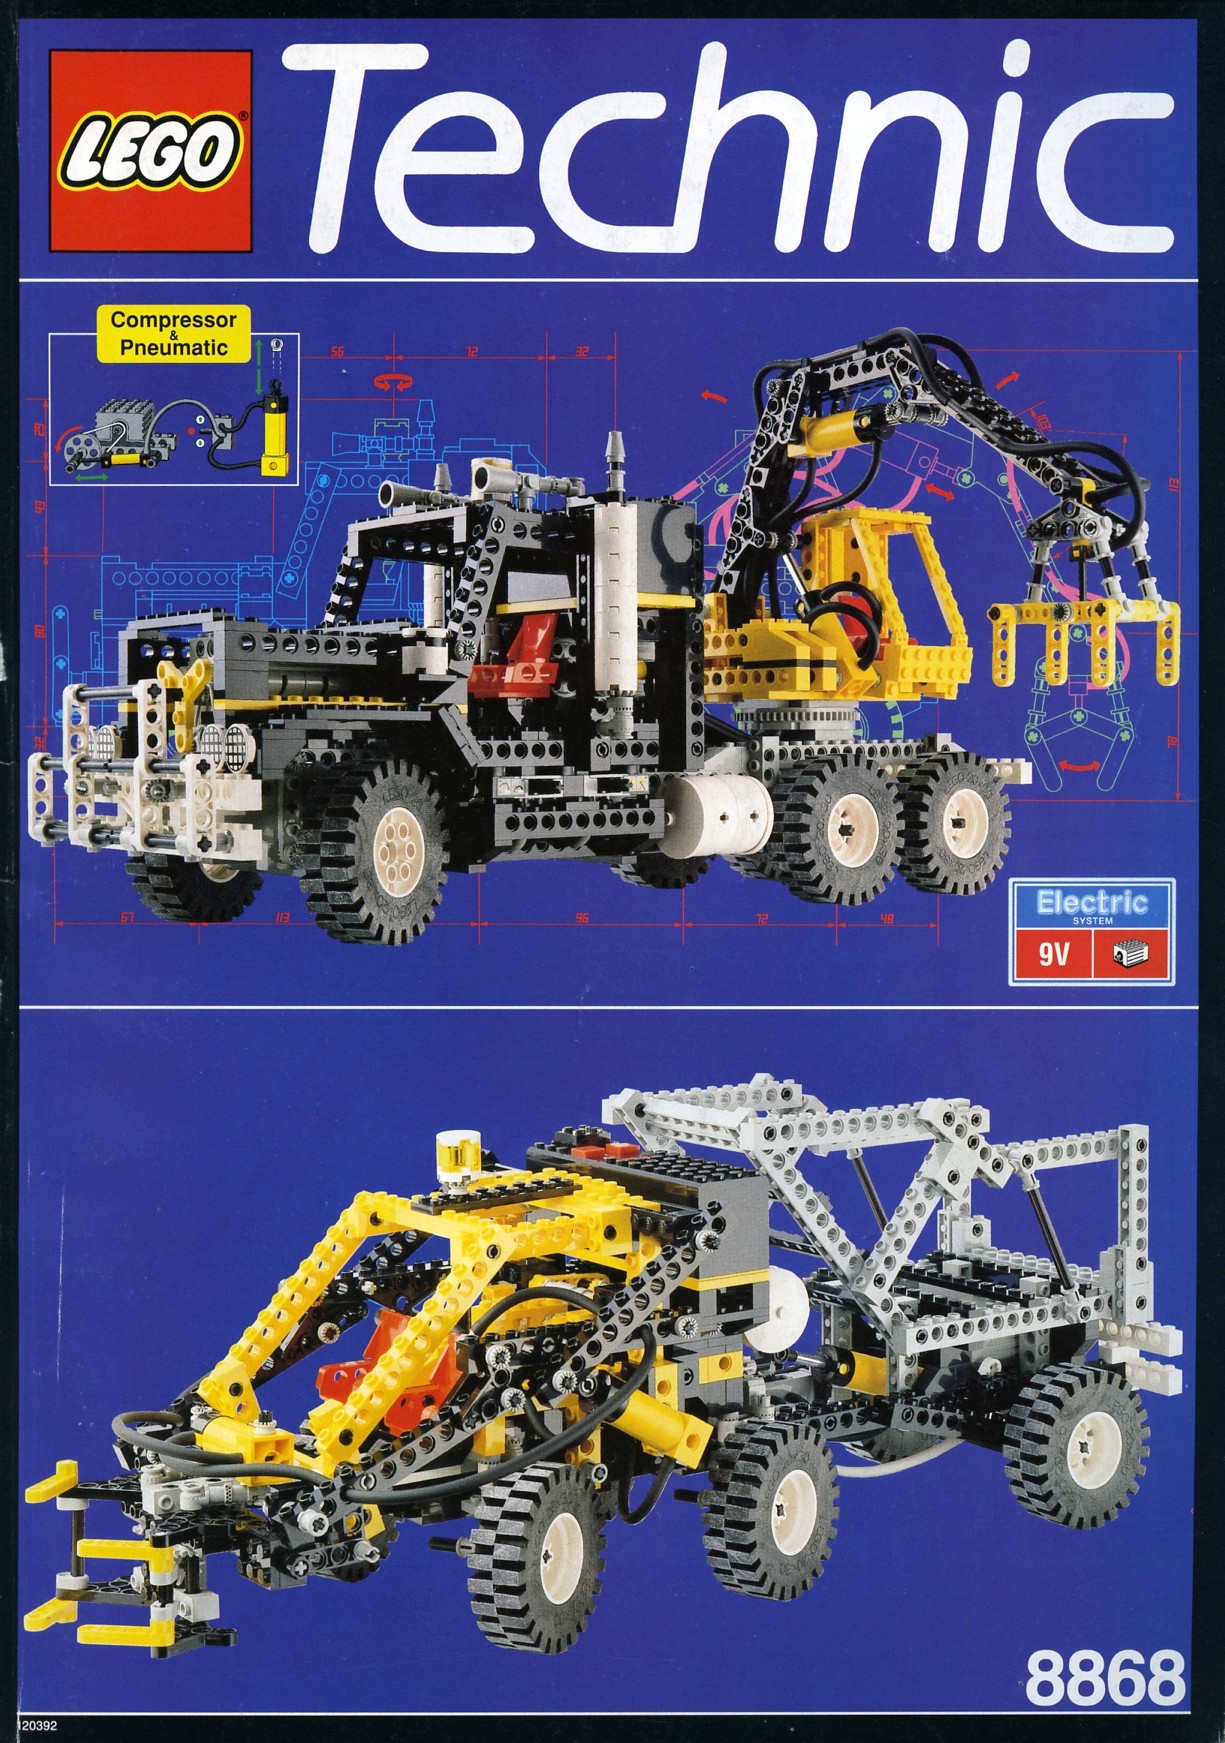 Evolution of the Brick: LEGO Technic Truck